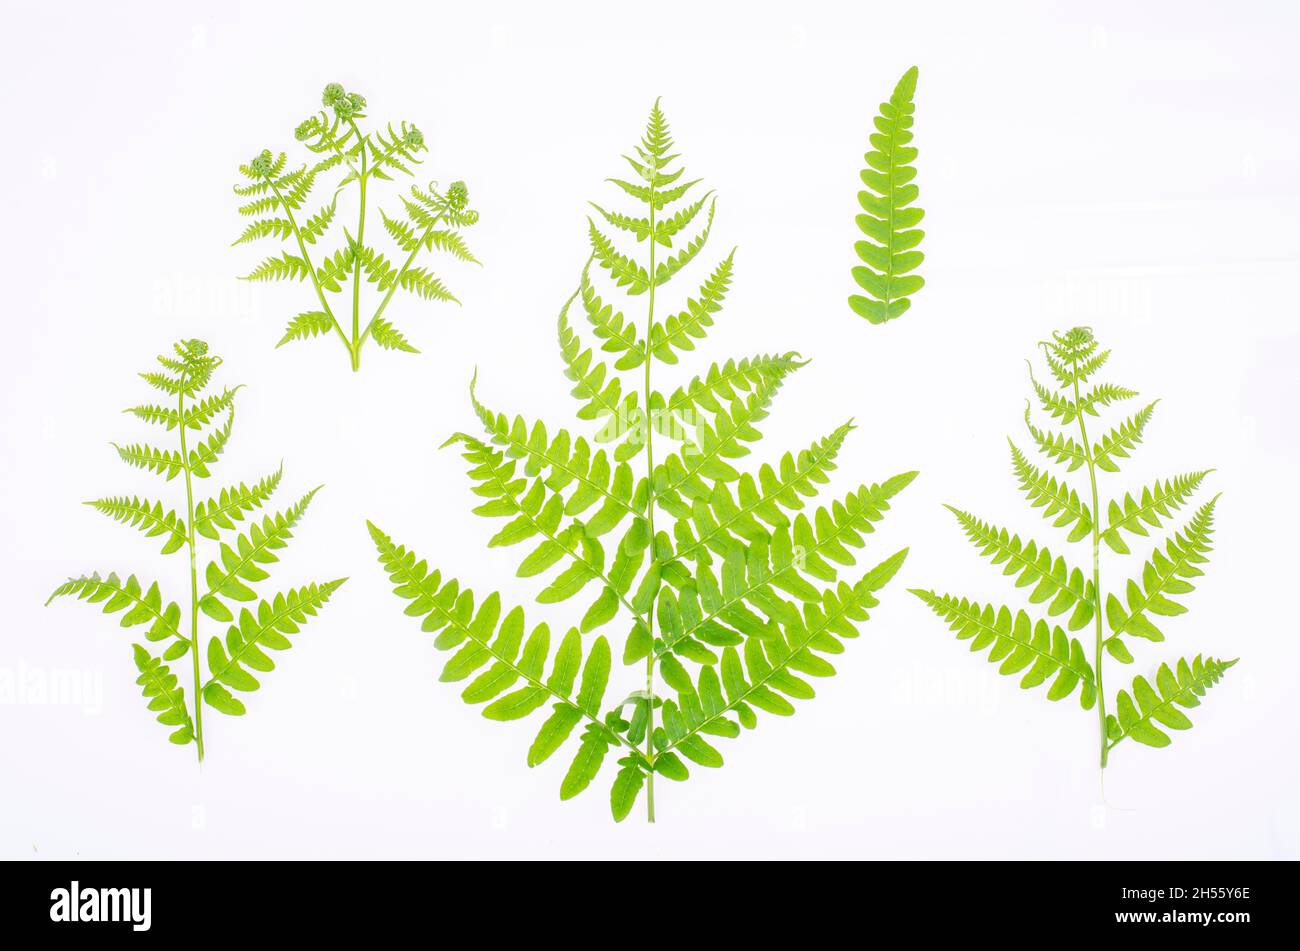 Green leaf of decorative fern on white background. Studio Photo Stock Photo